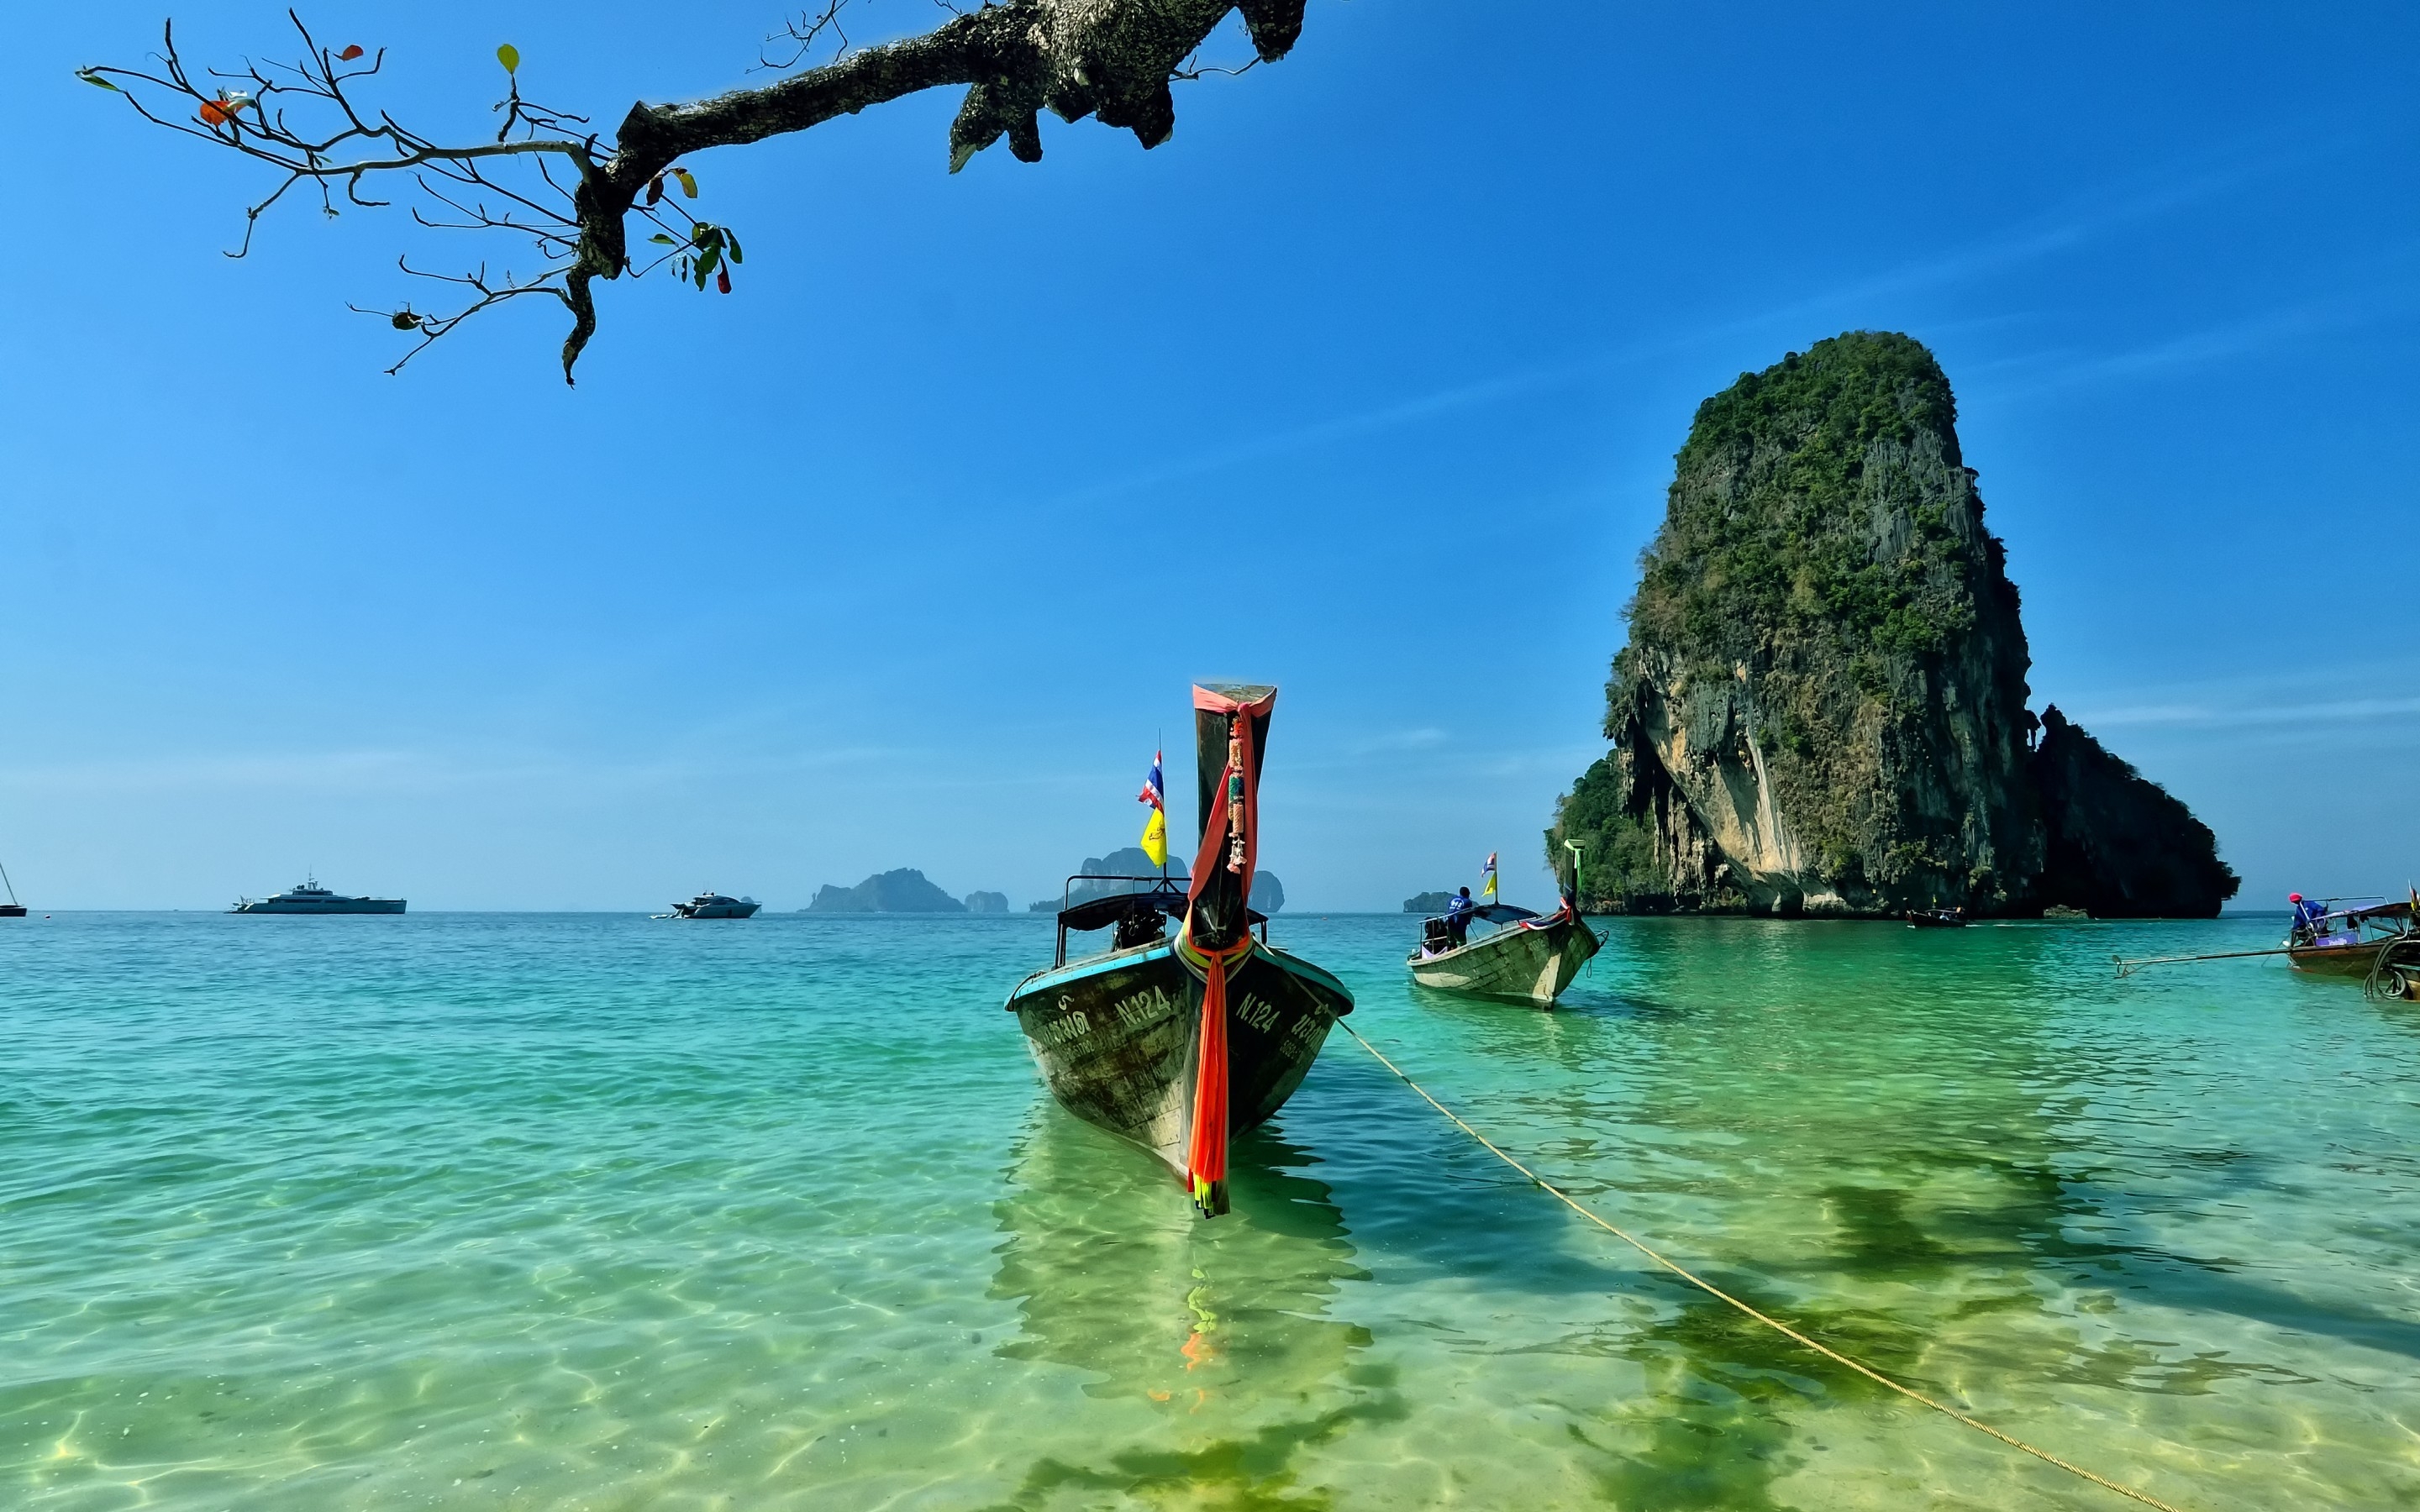 Railay Beach Thailand for 2880 x 1800 Retina Display resolution